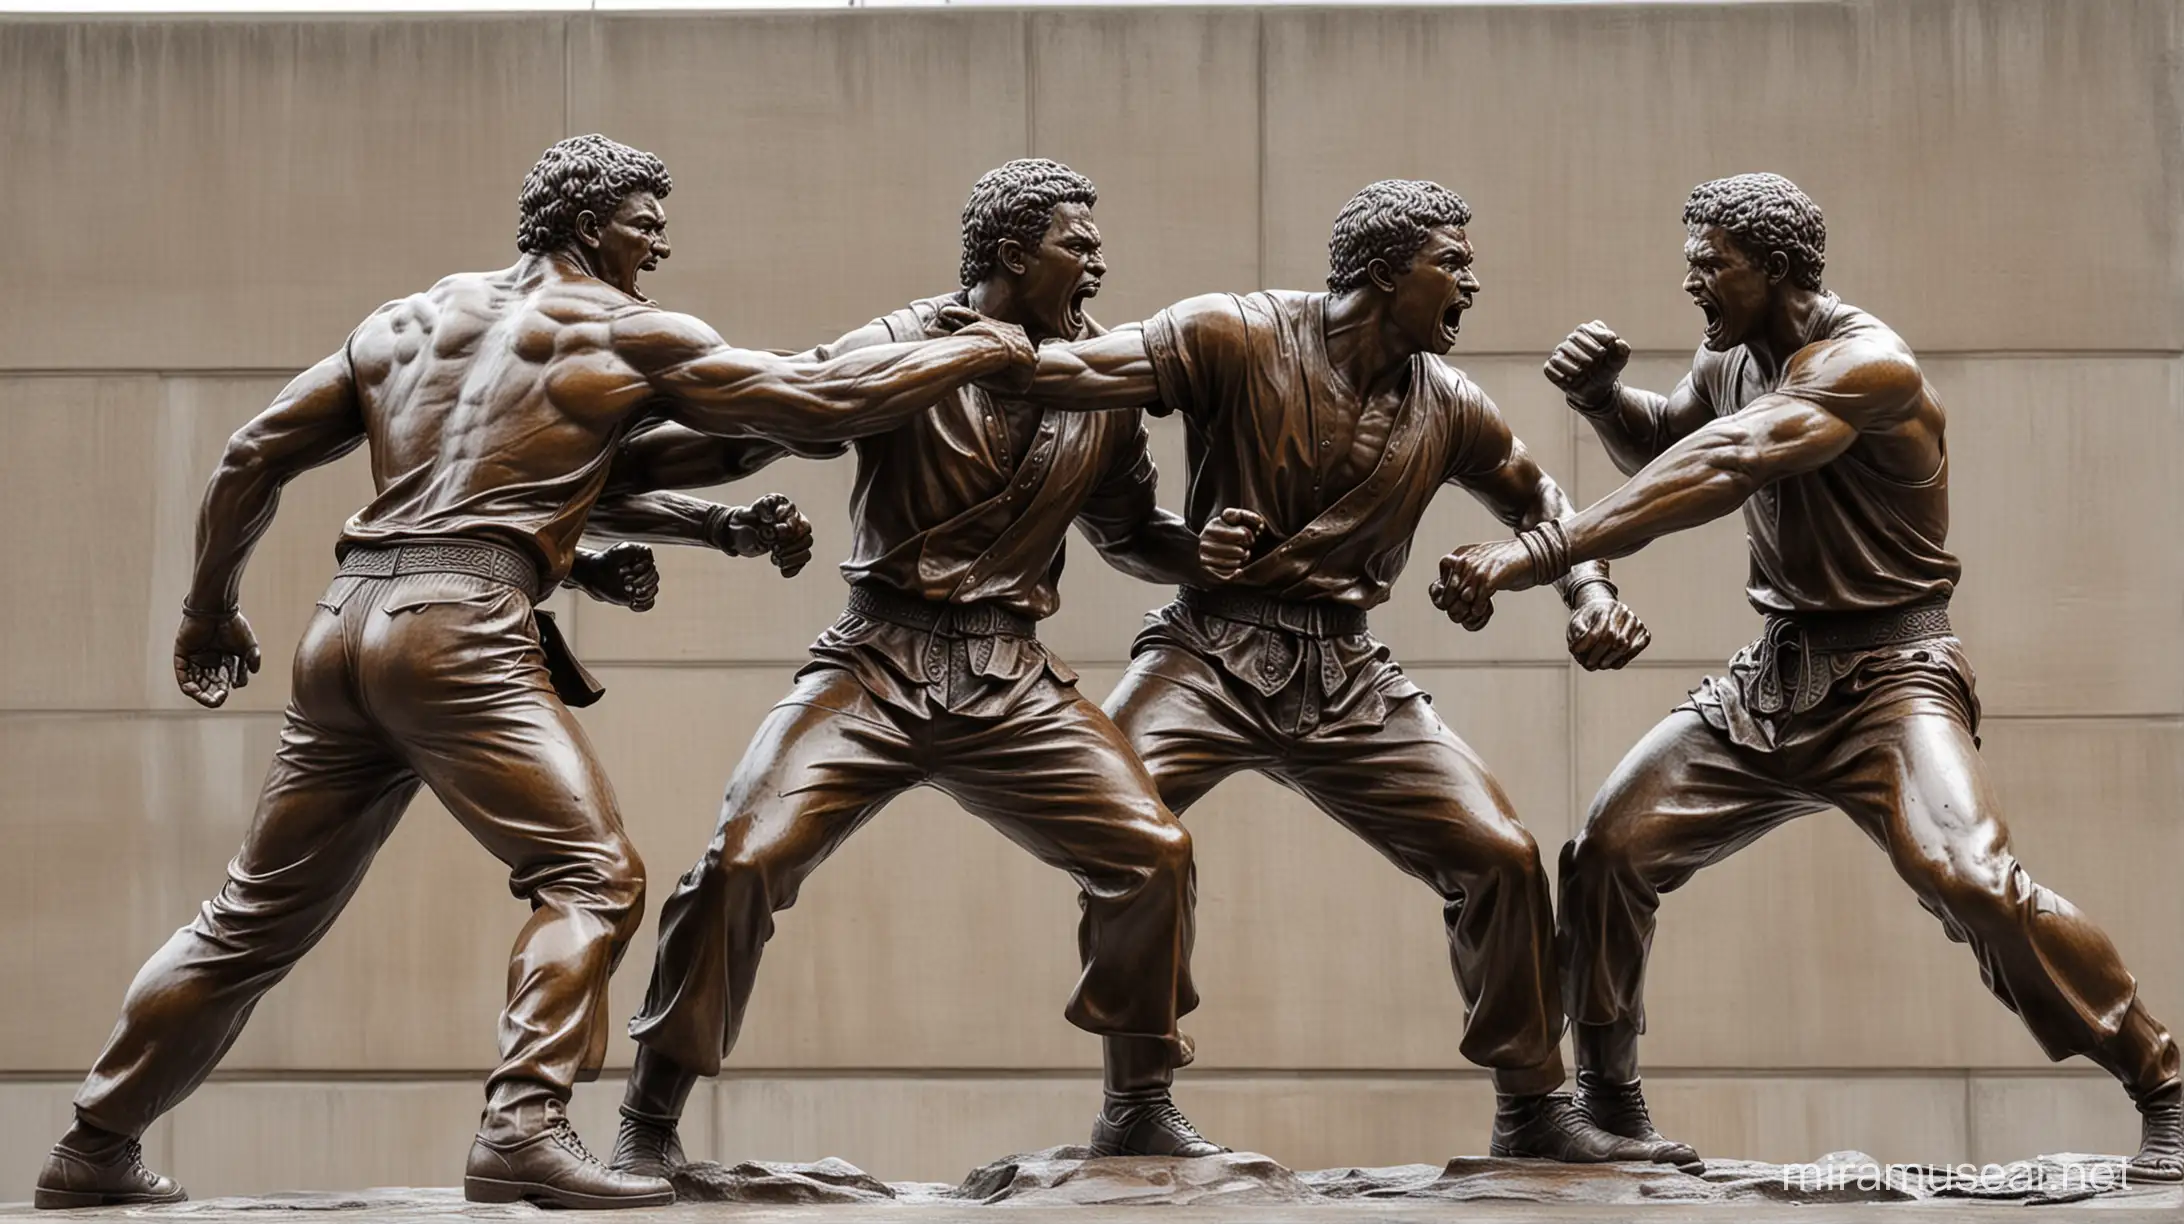 Four Hooligans Engaged in a Fierce Street Brawl Sculpture